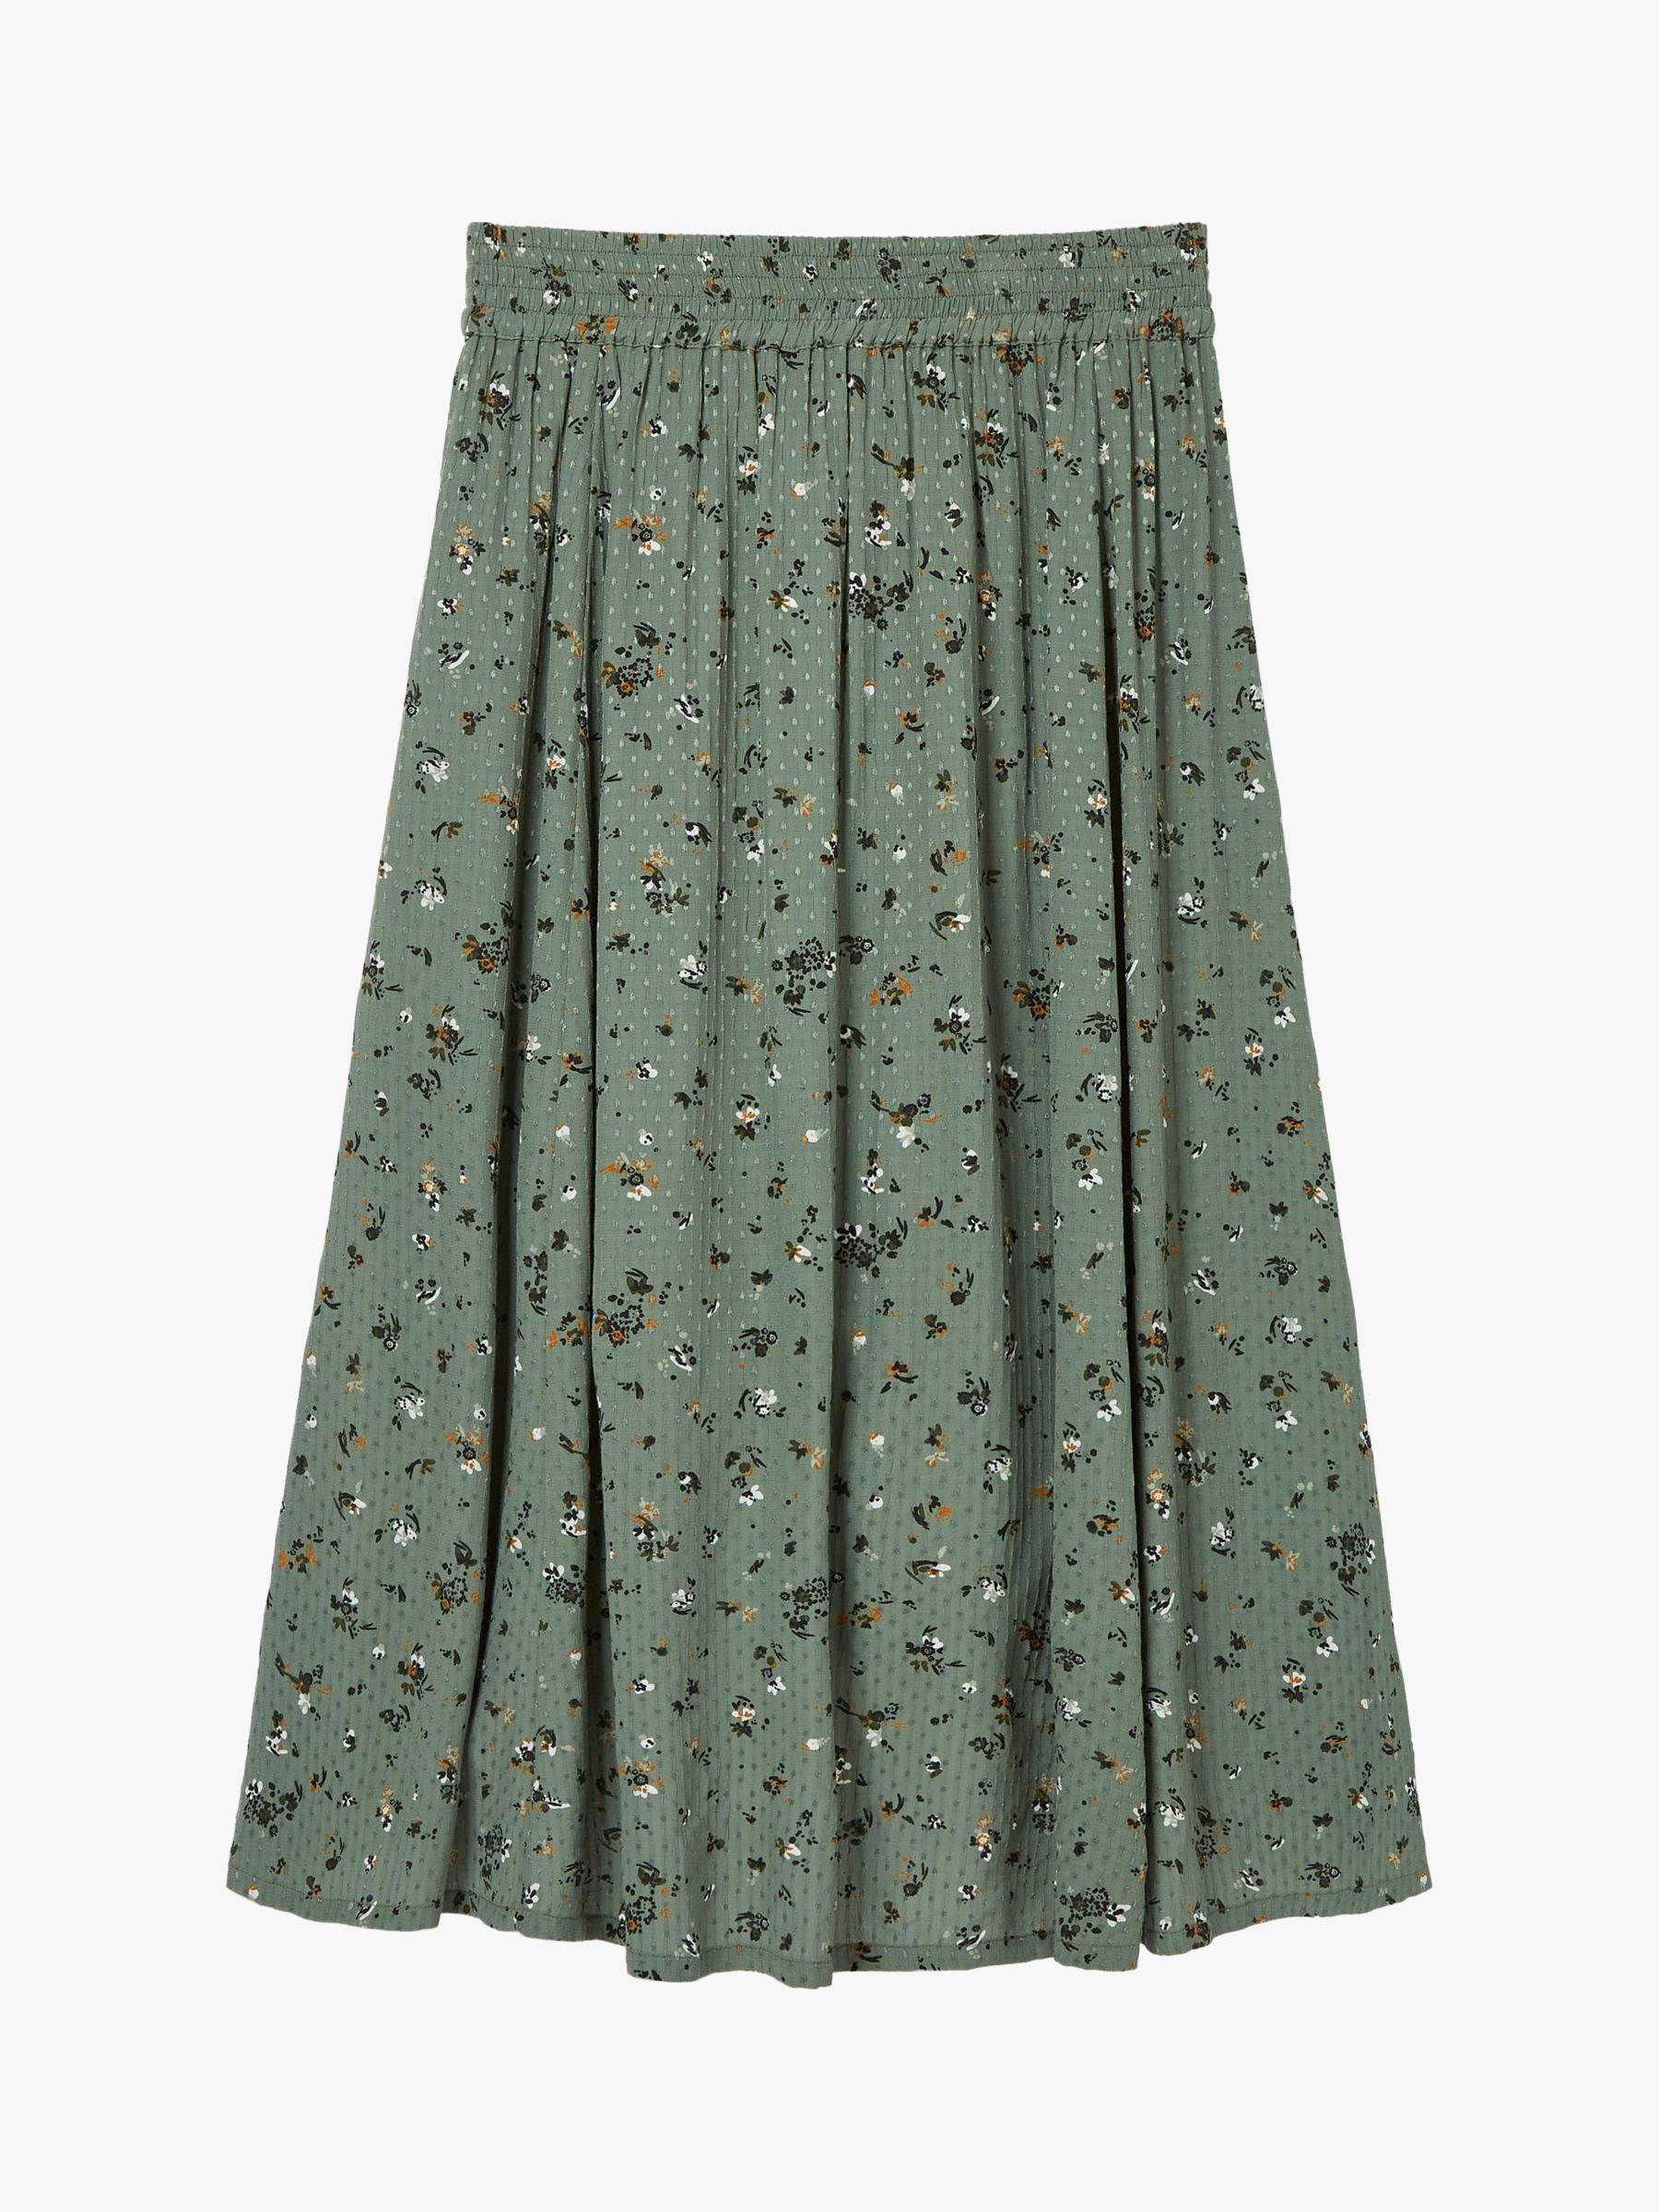 FatFace Millie Sketched Floral Midi Skirt, Olive Green at John Lewis ...